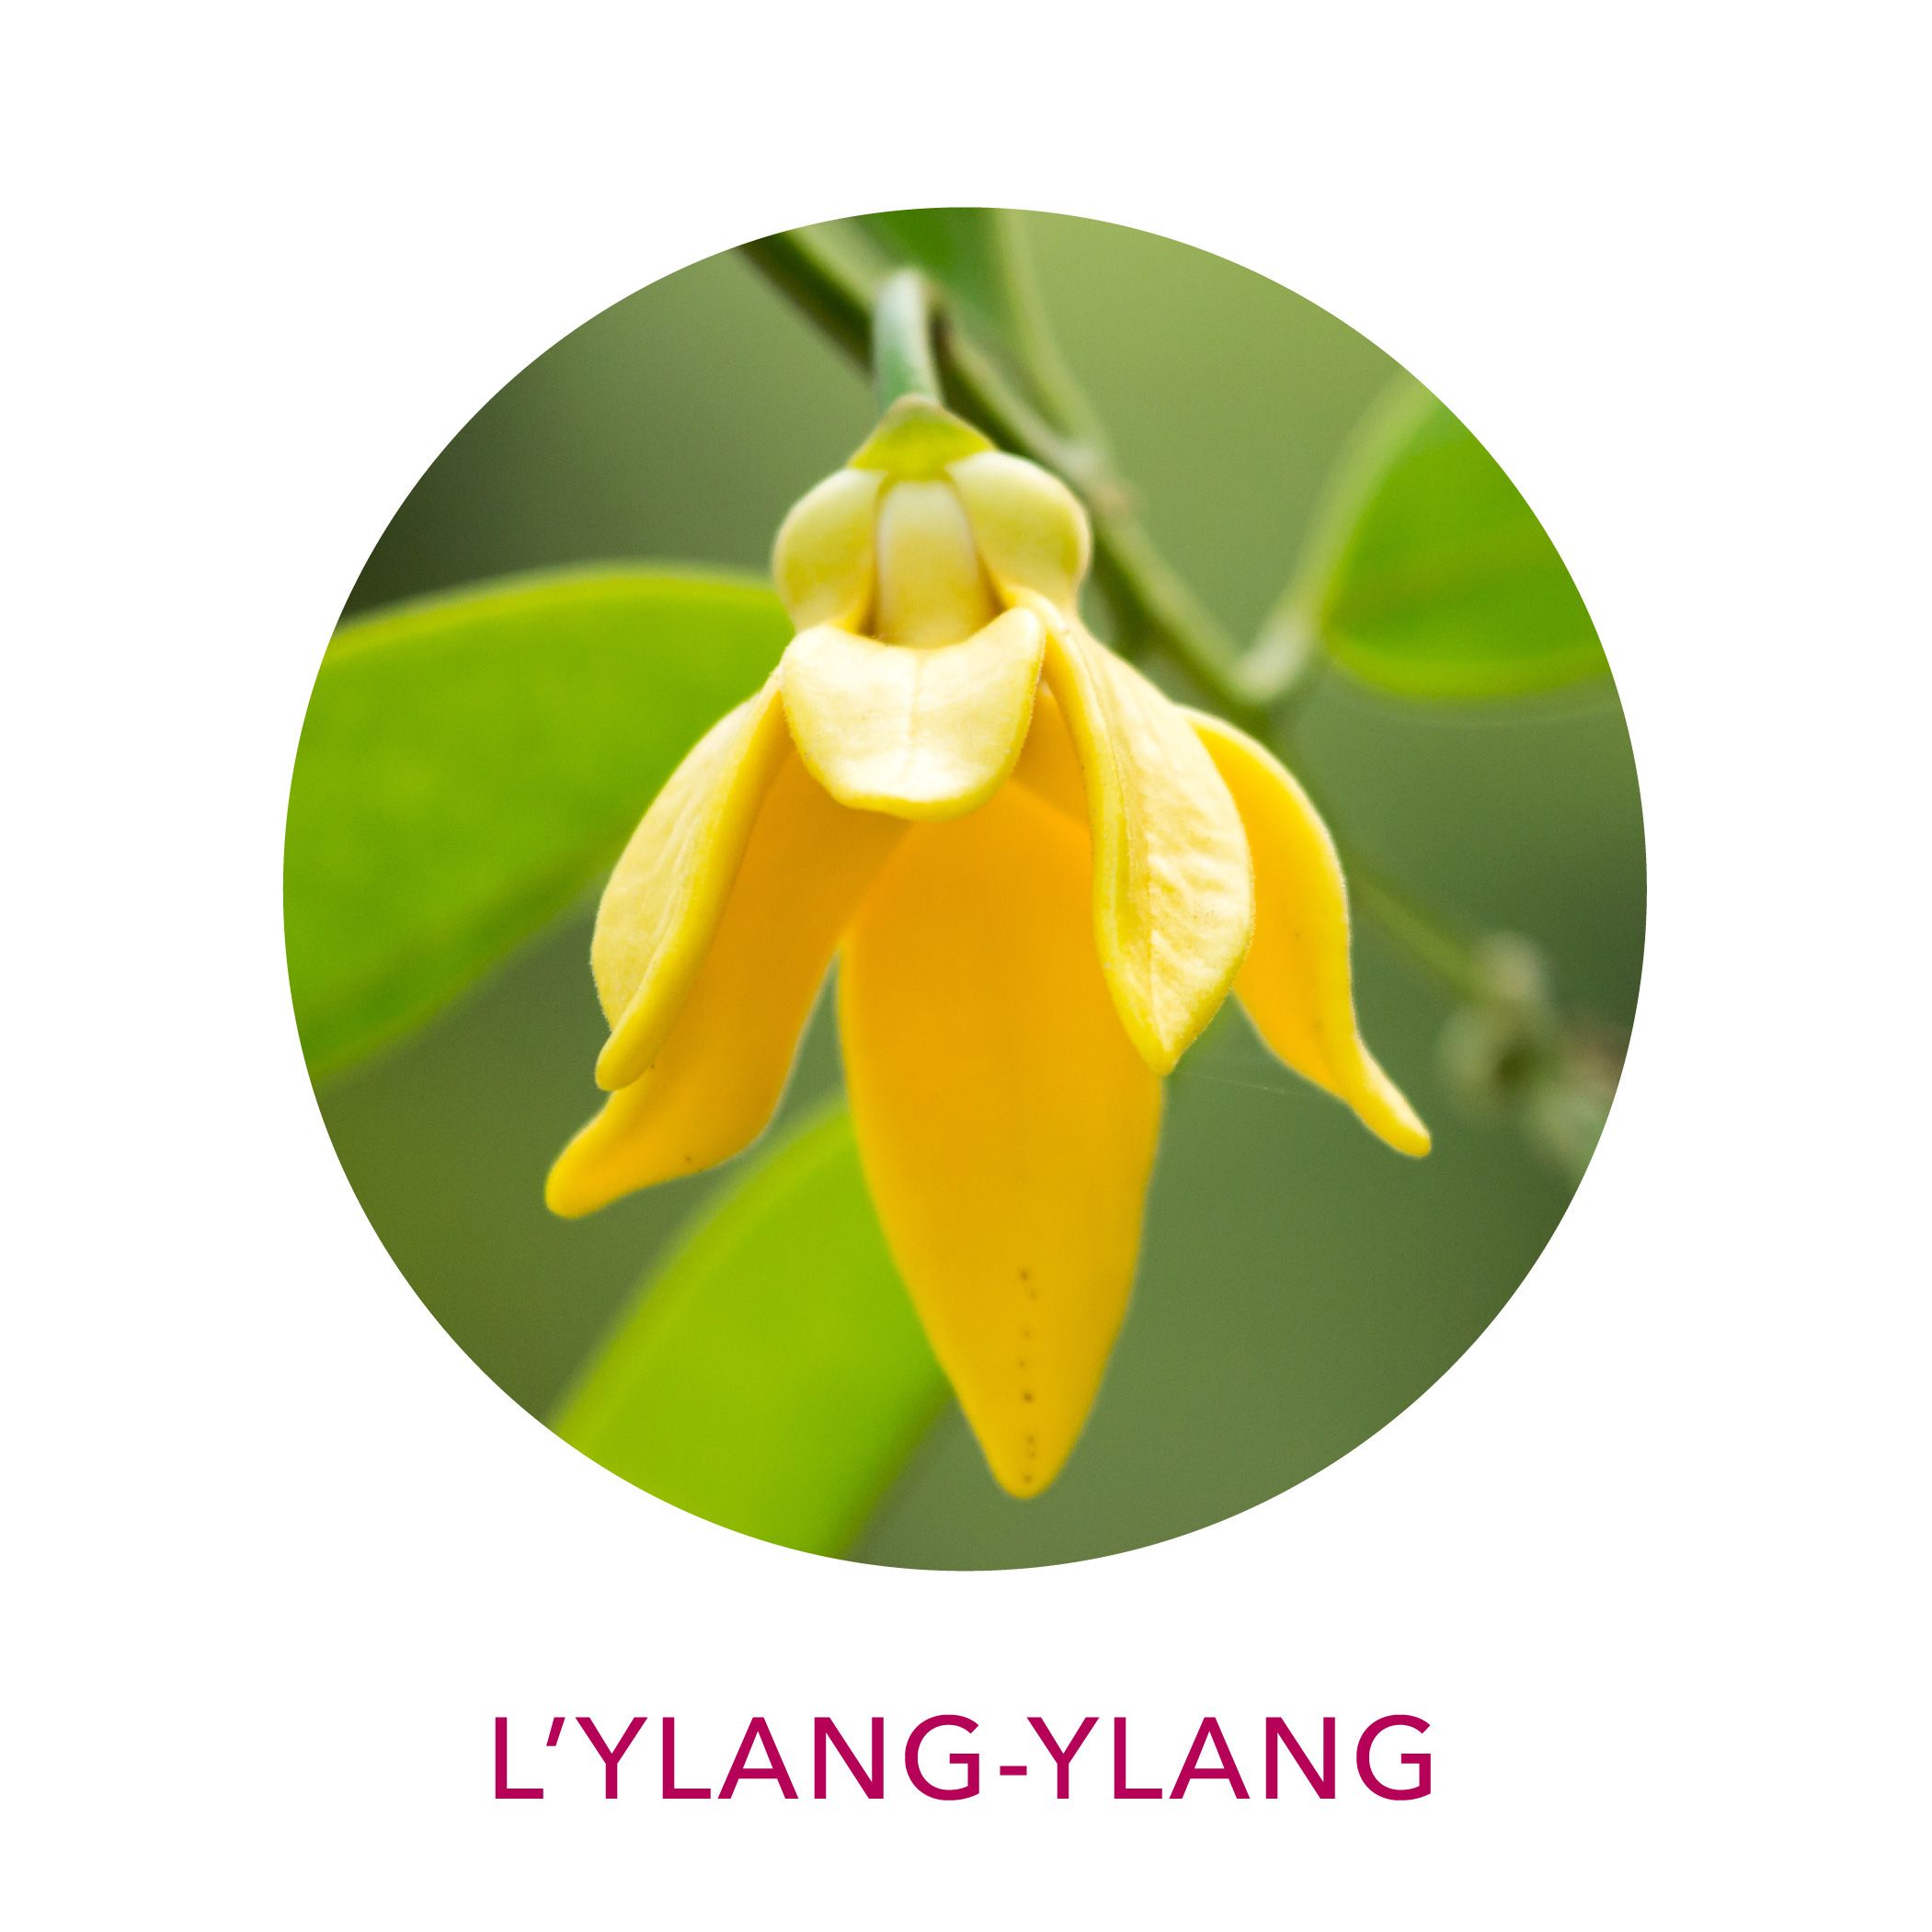 Actif cosmétique Clairjoie Ylang-ylang